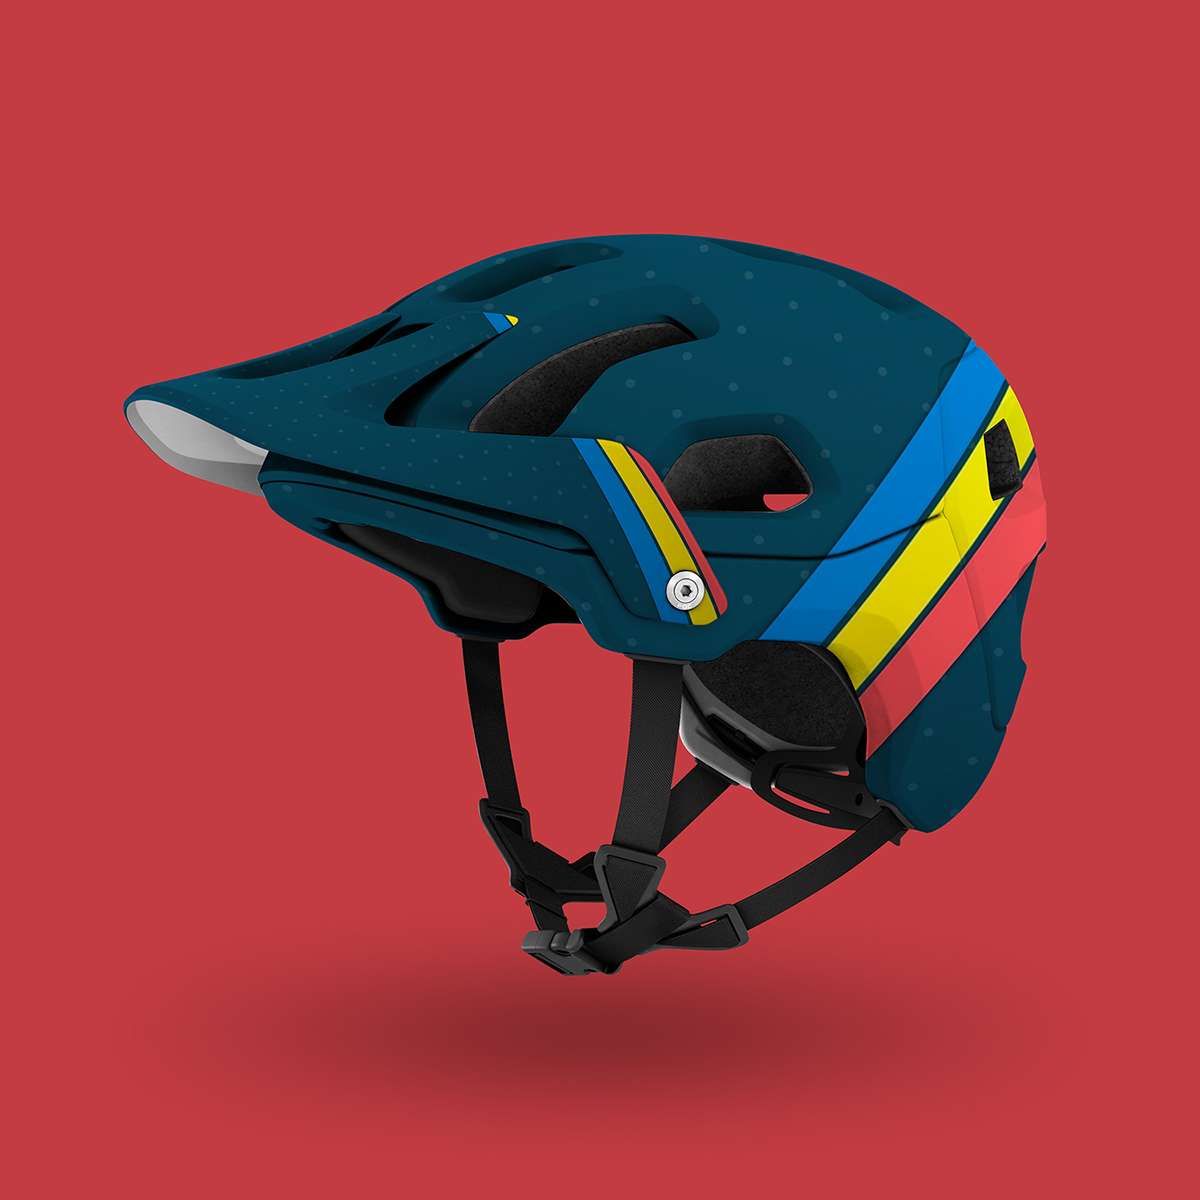 Download 33+ Bike Helmet Mockup Background Yellowimages - Free PSD ...